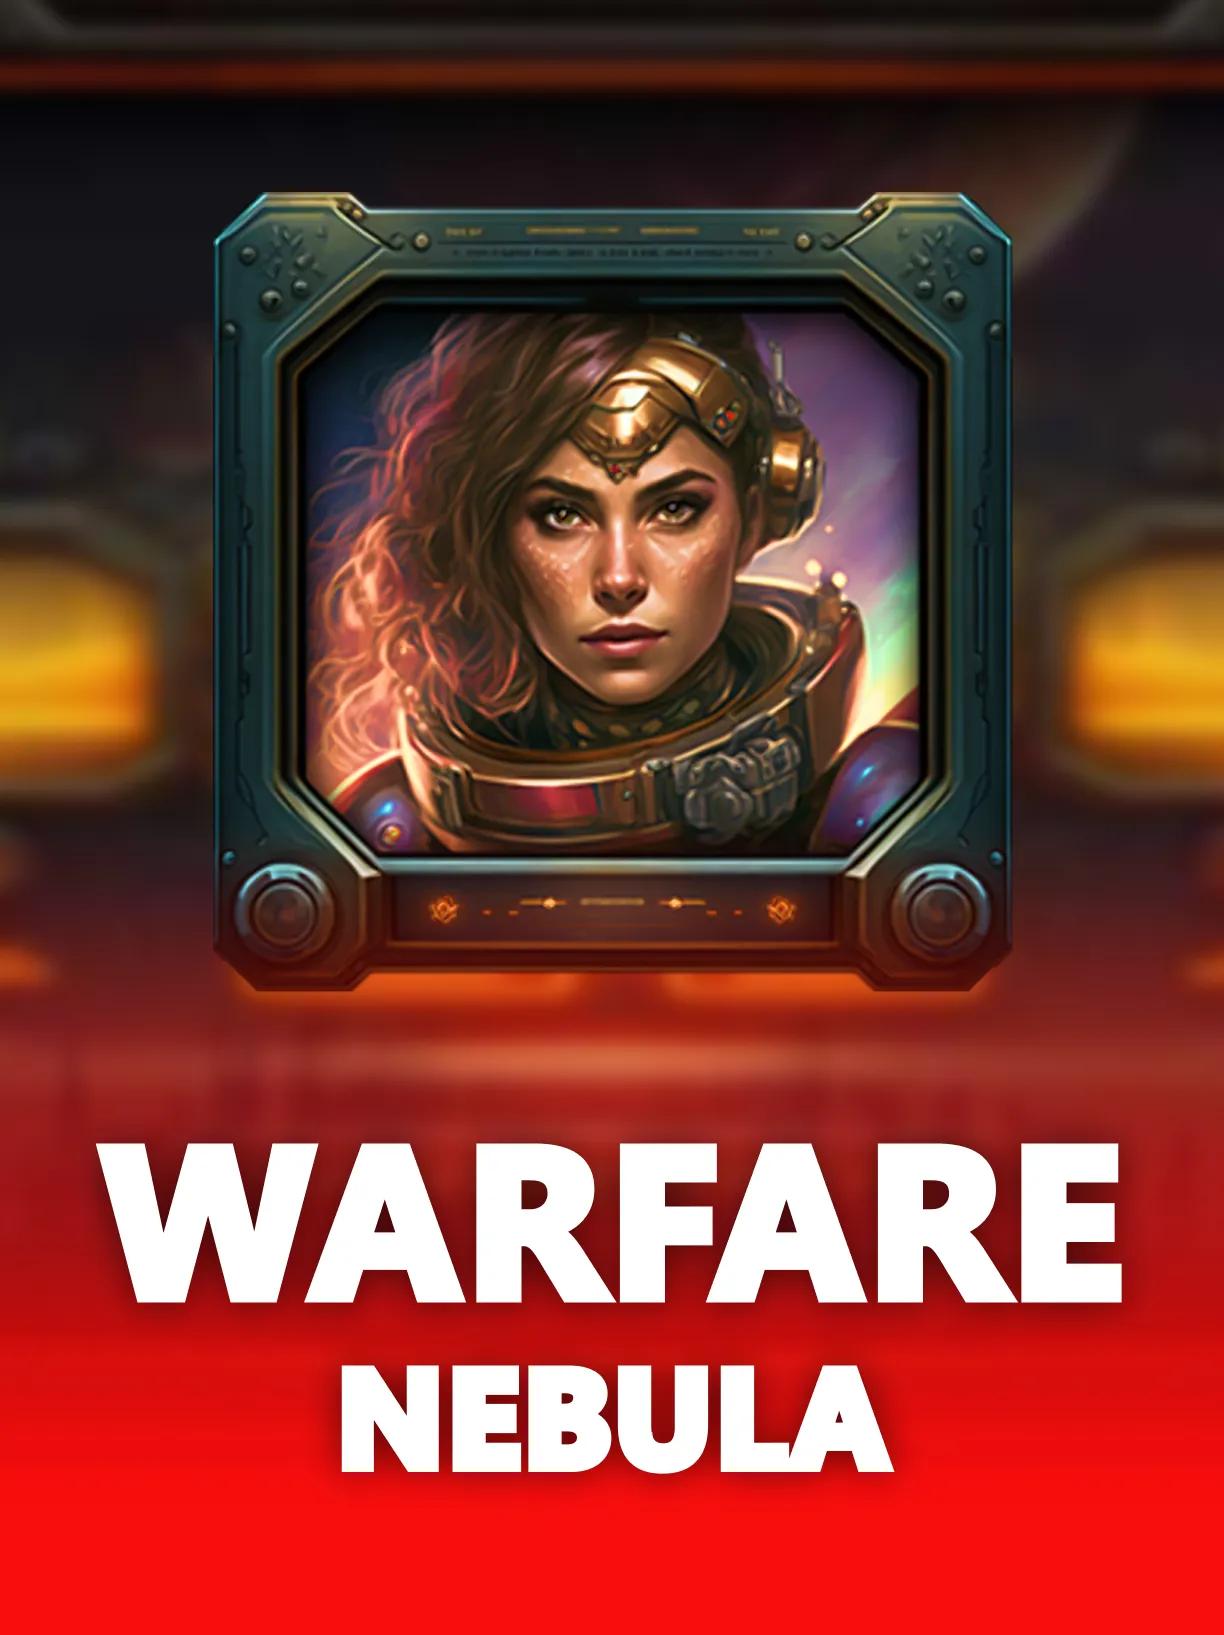 Warfare Nebula